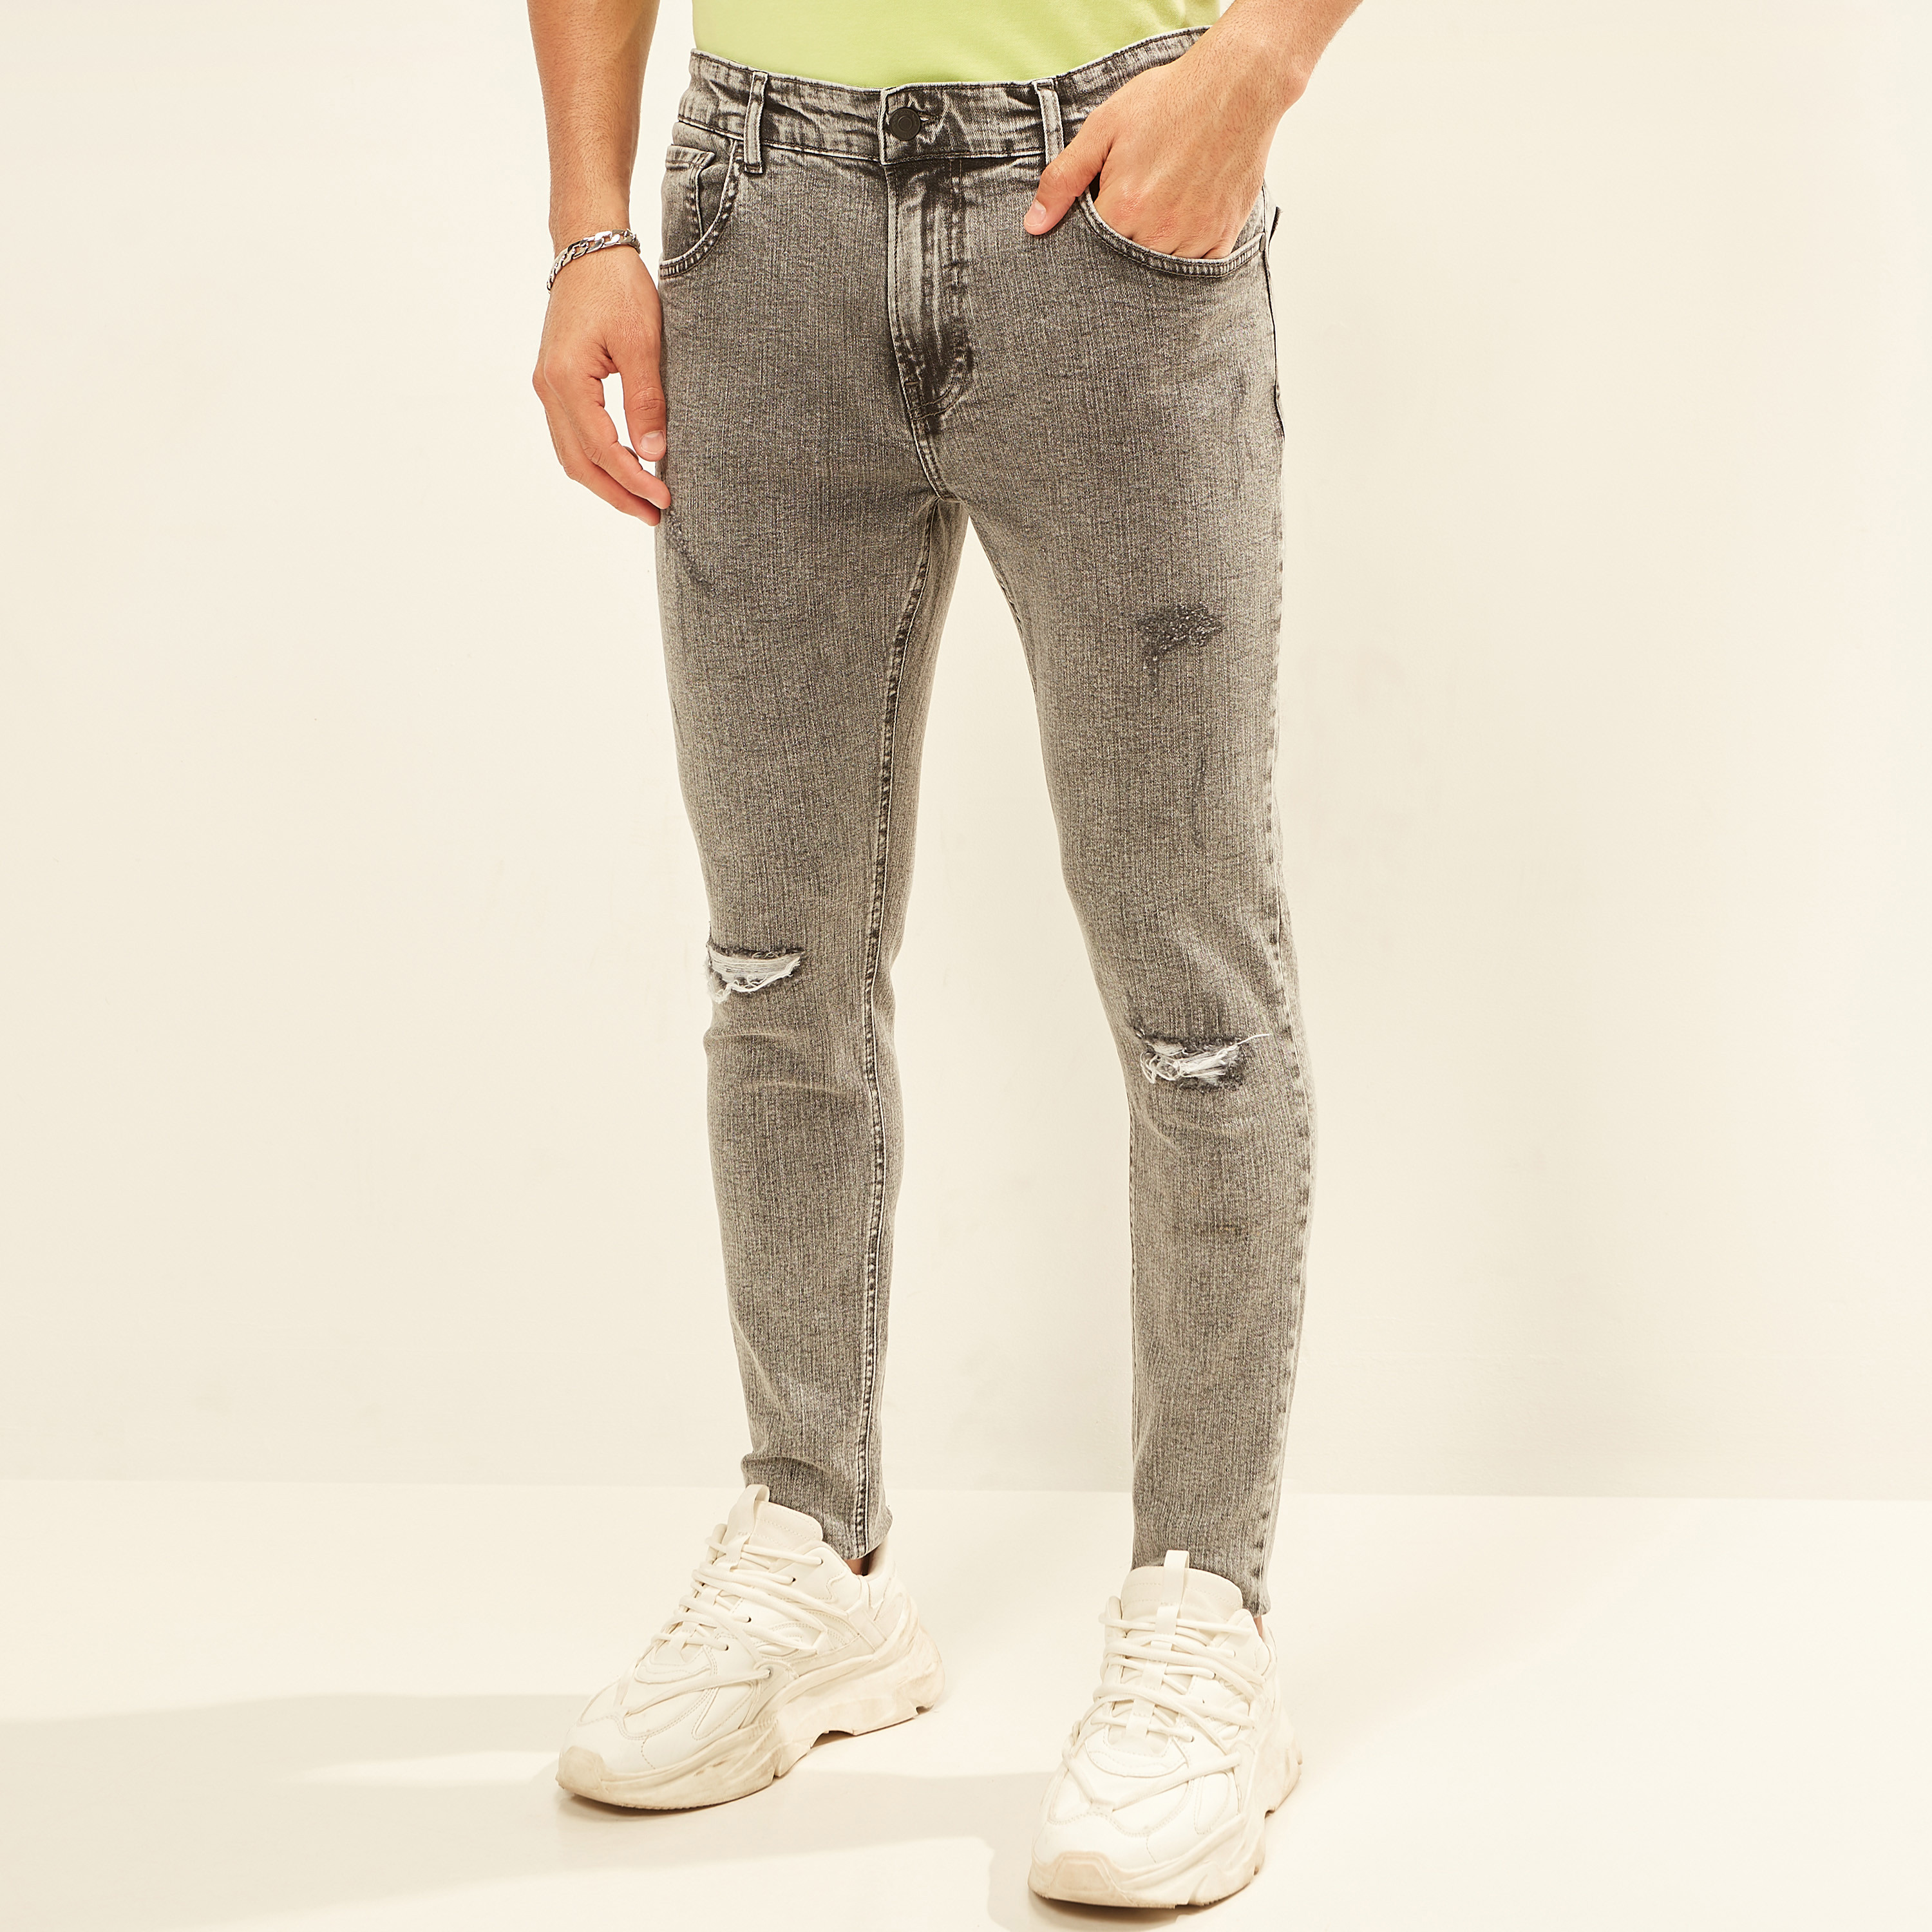 Bershka Petite high waist ankle length skinny jean in grey | ASOS